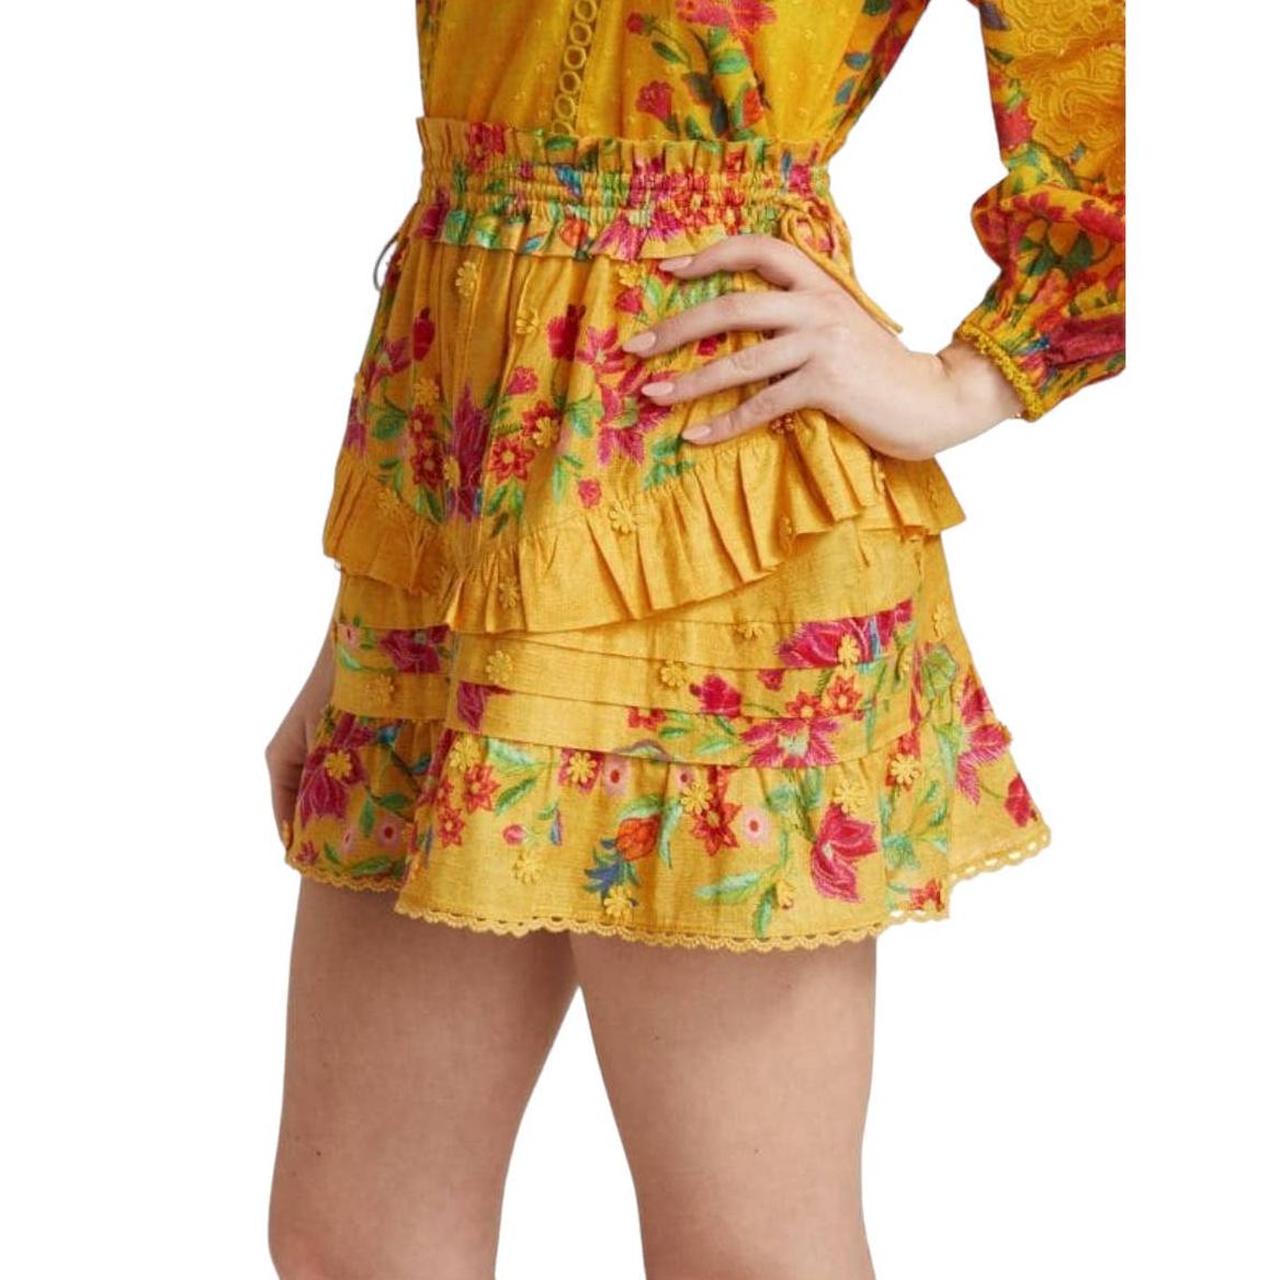 Farm Rio Women's Yellow Skirt (2)